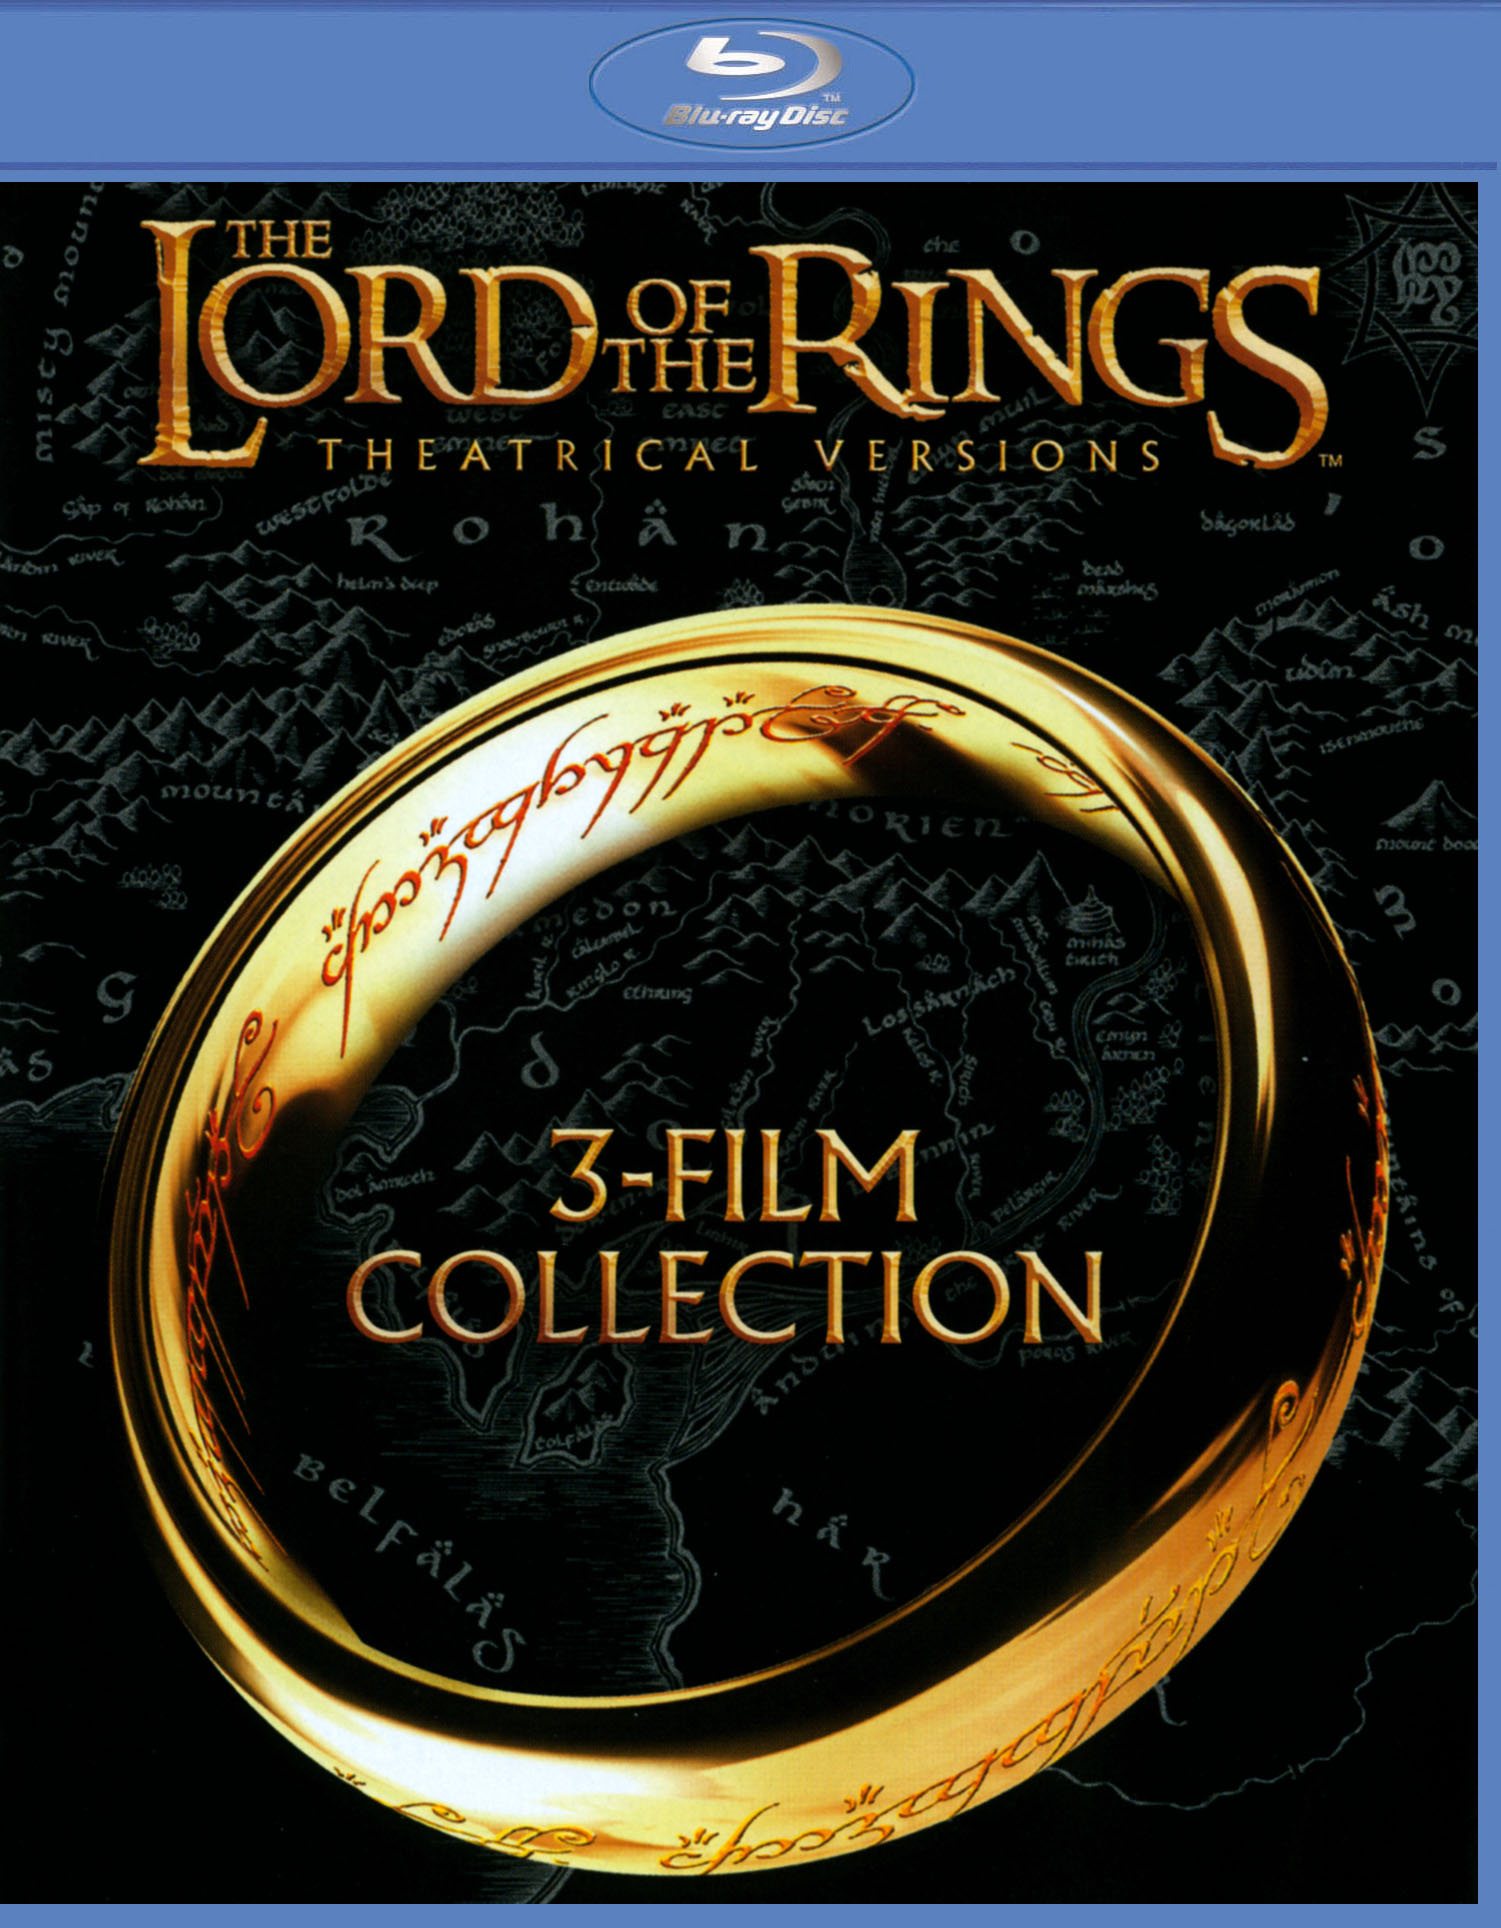 Stiahni si HD Filmy Pan Prstenu Trilogie/he Lord of the Rings Trilogy  (2001-2003)(CZ/EN)[1080pHD]